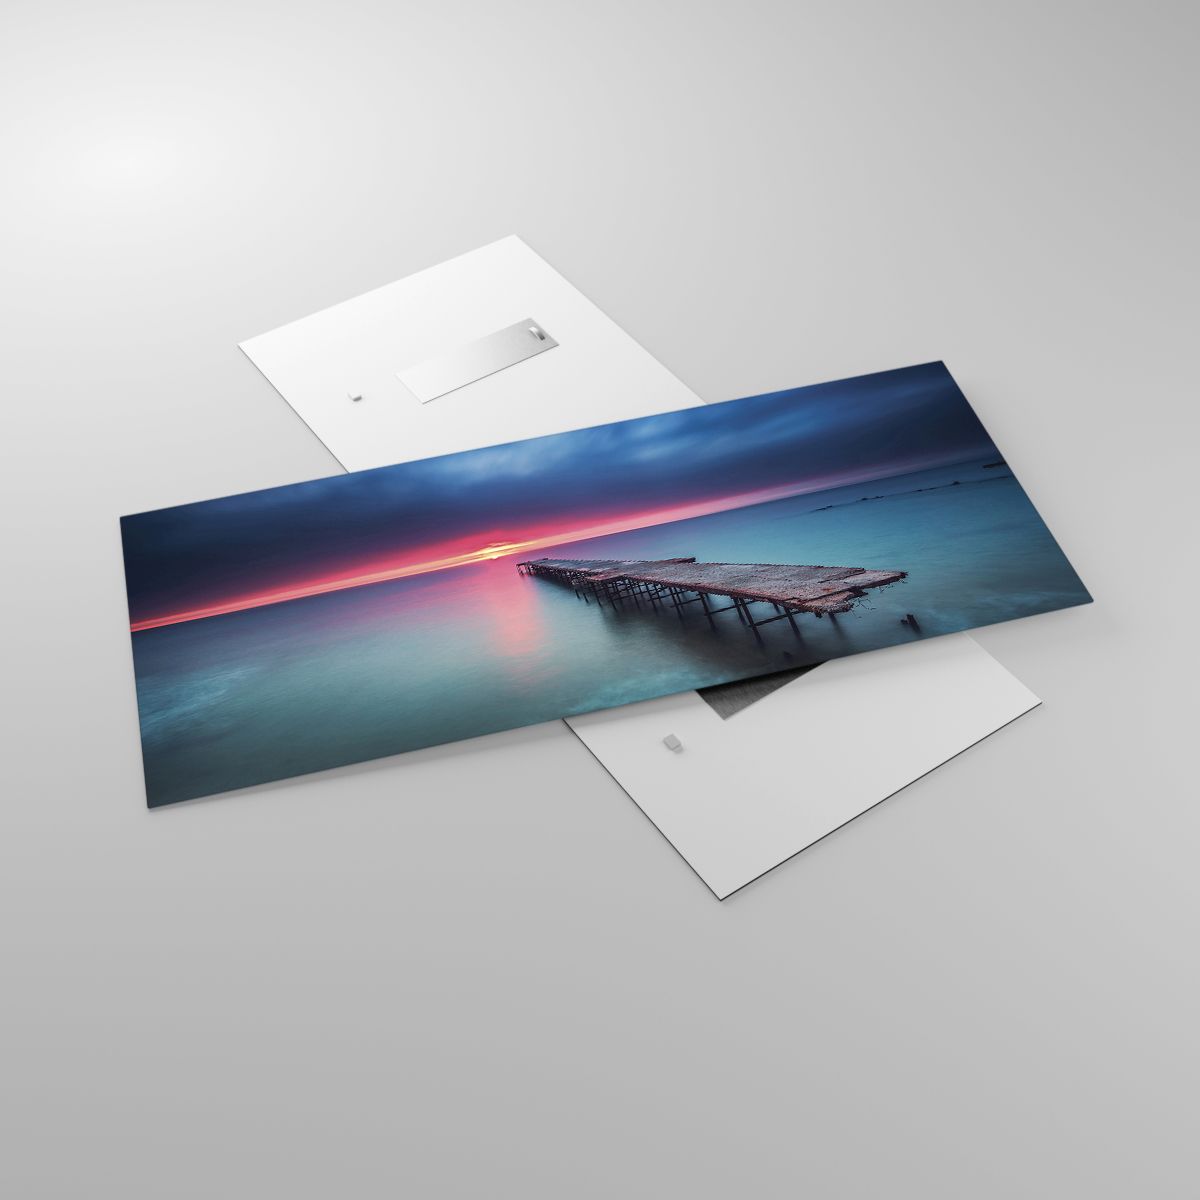 Glasbild Landschaft, Glasbild Meer, Glasbild Der Sonnenuntergang, Glasbild Holzbrücke, Glasbild Horizont